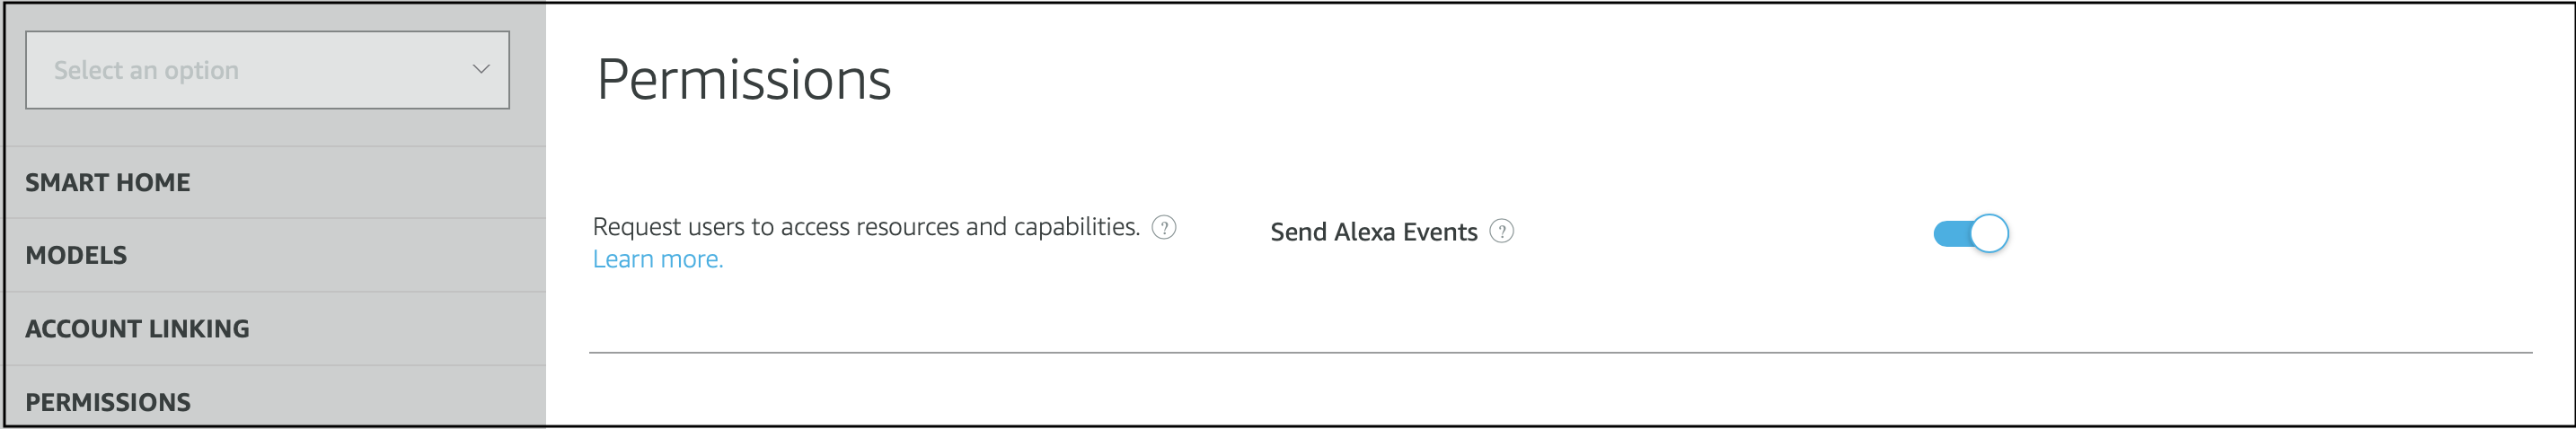 Enable Send Alexa Events